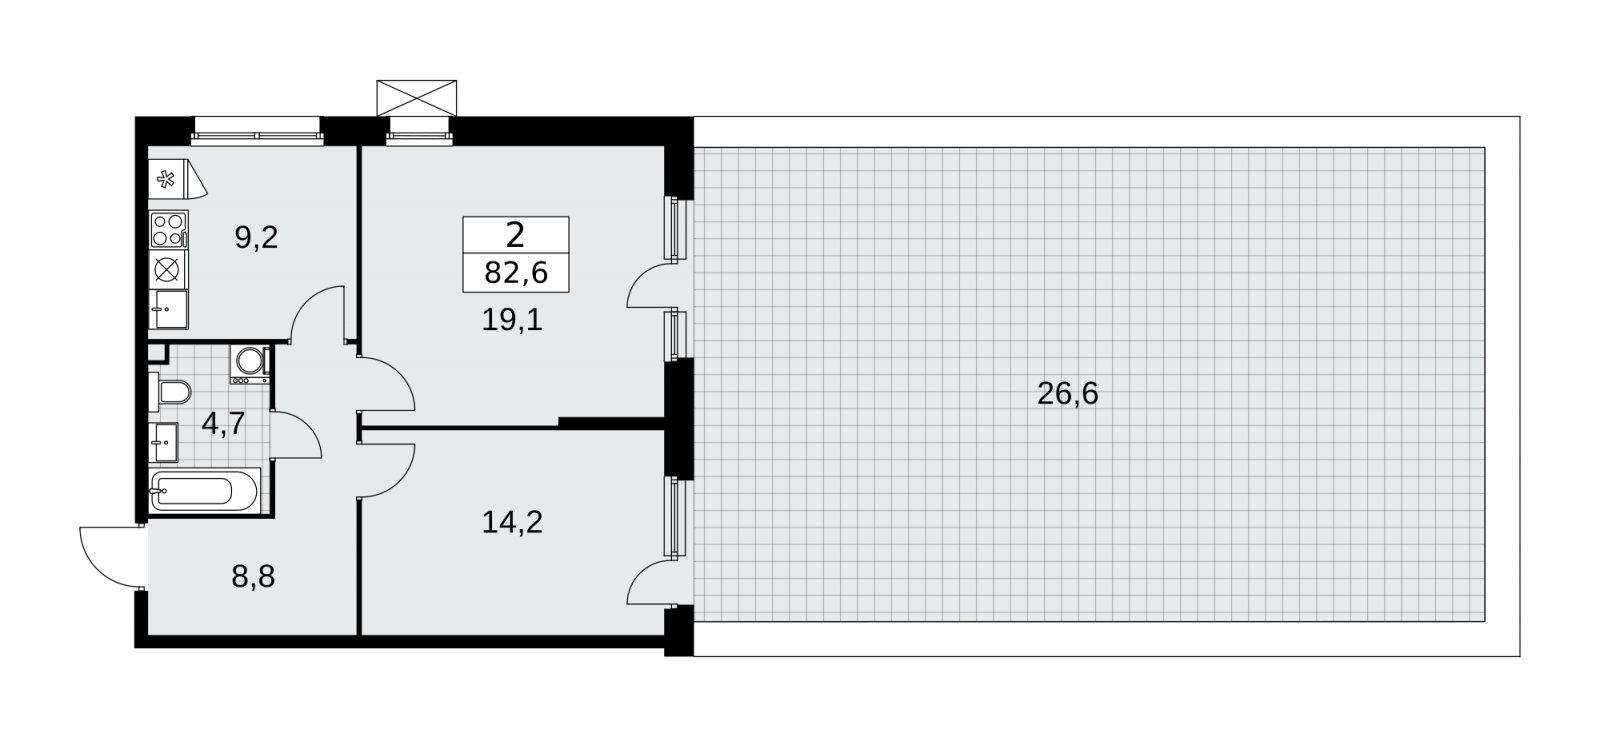 2-комнатная квартира с частичной отделкой, 82.6 м2, 2 этаж, сдача 2 квартал 2026 г., ЖК Скандинавия, корпус 25.2 - объявление 2283454 - фото №1